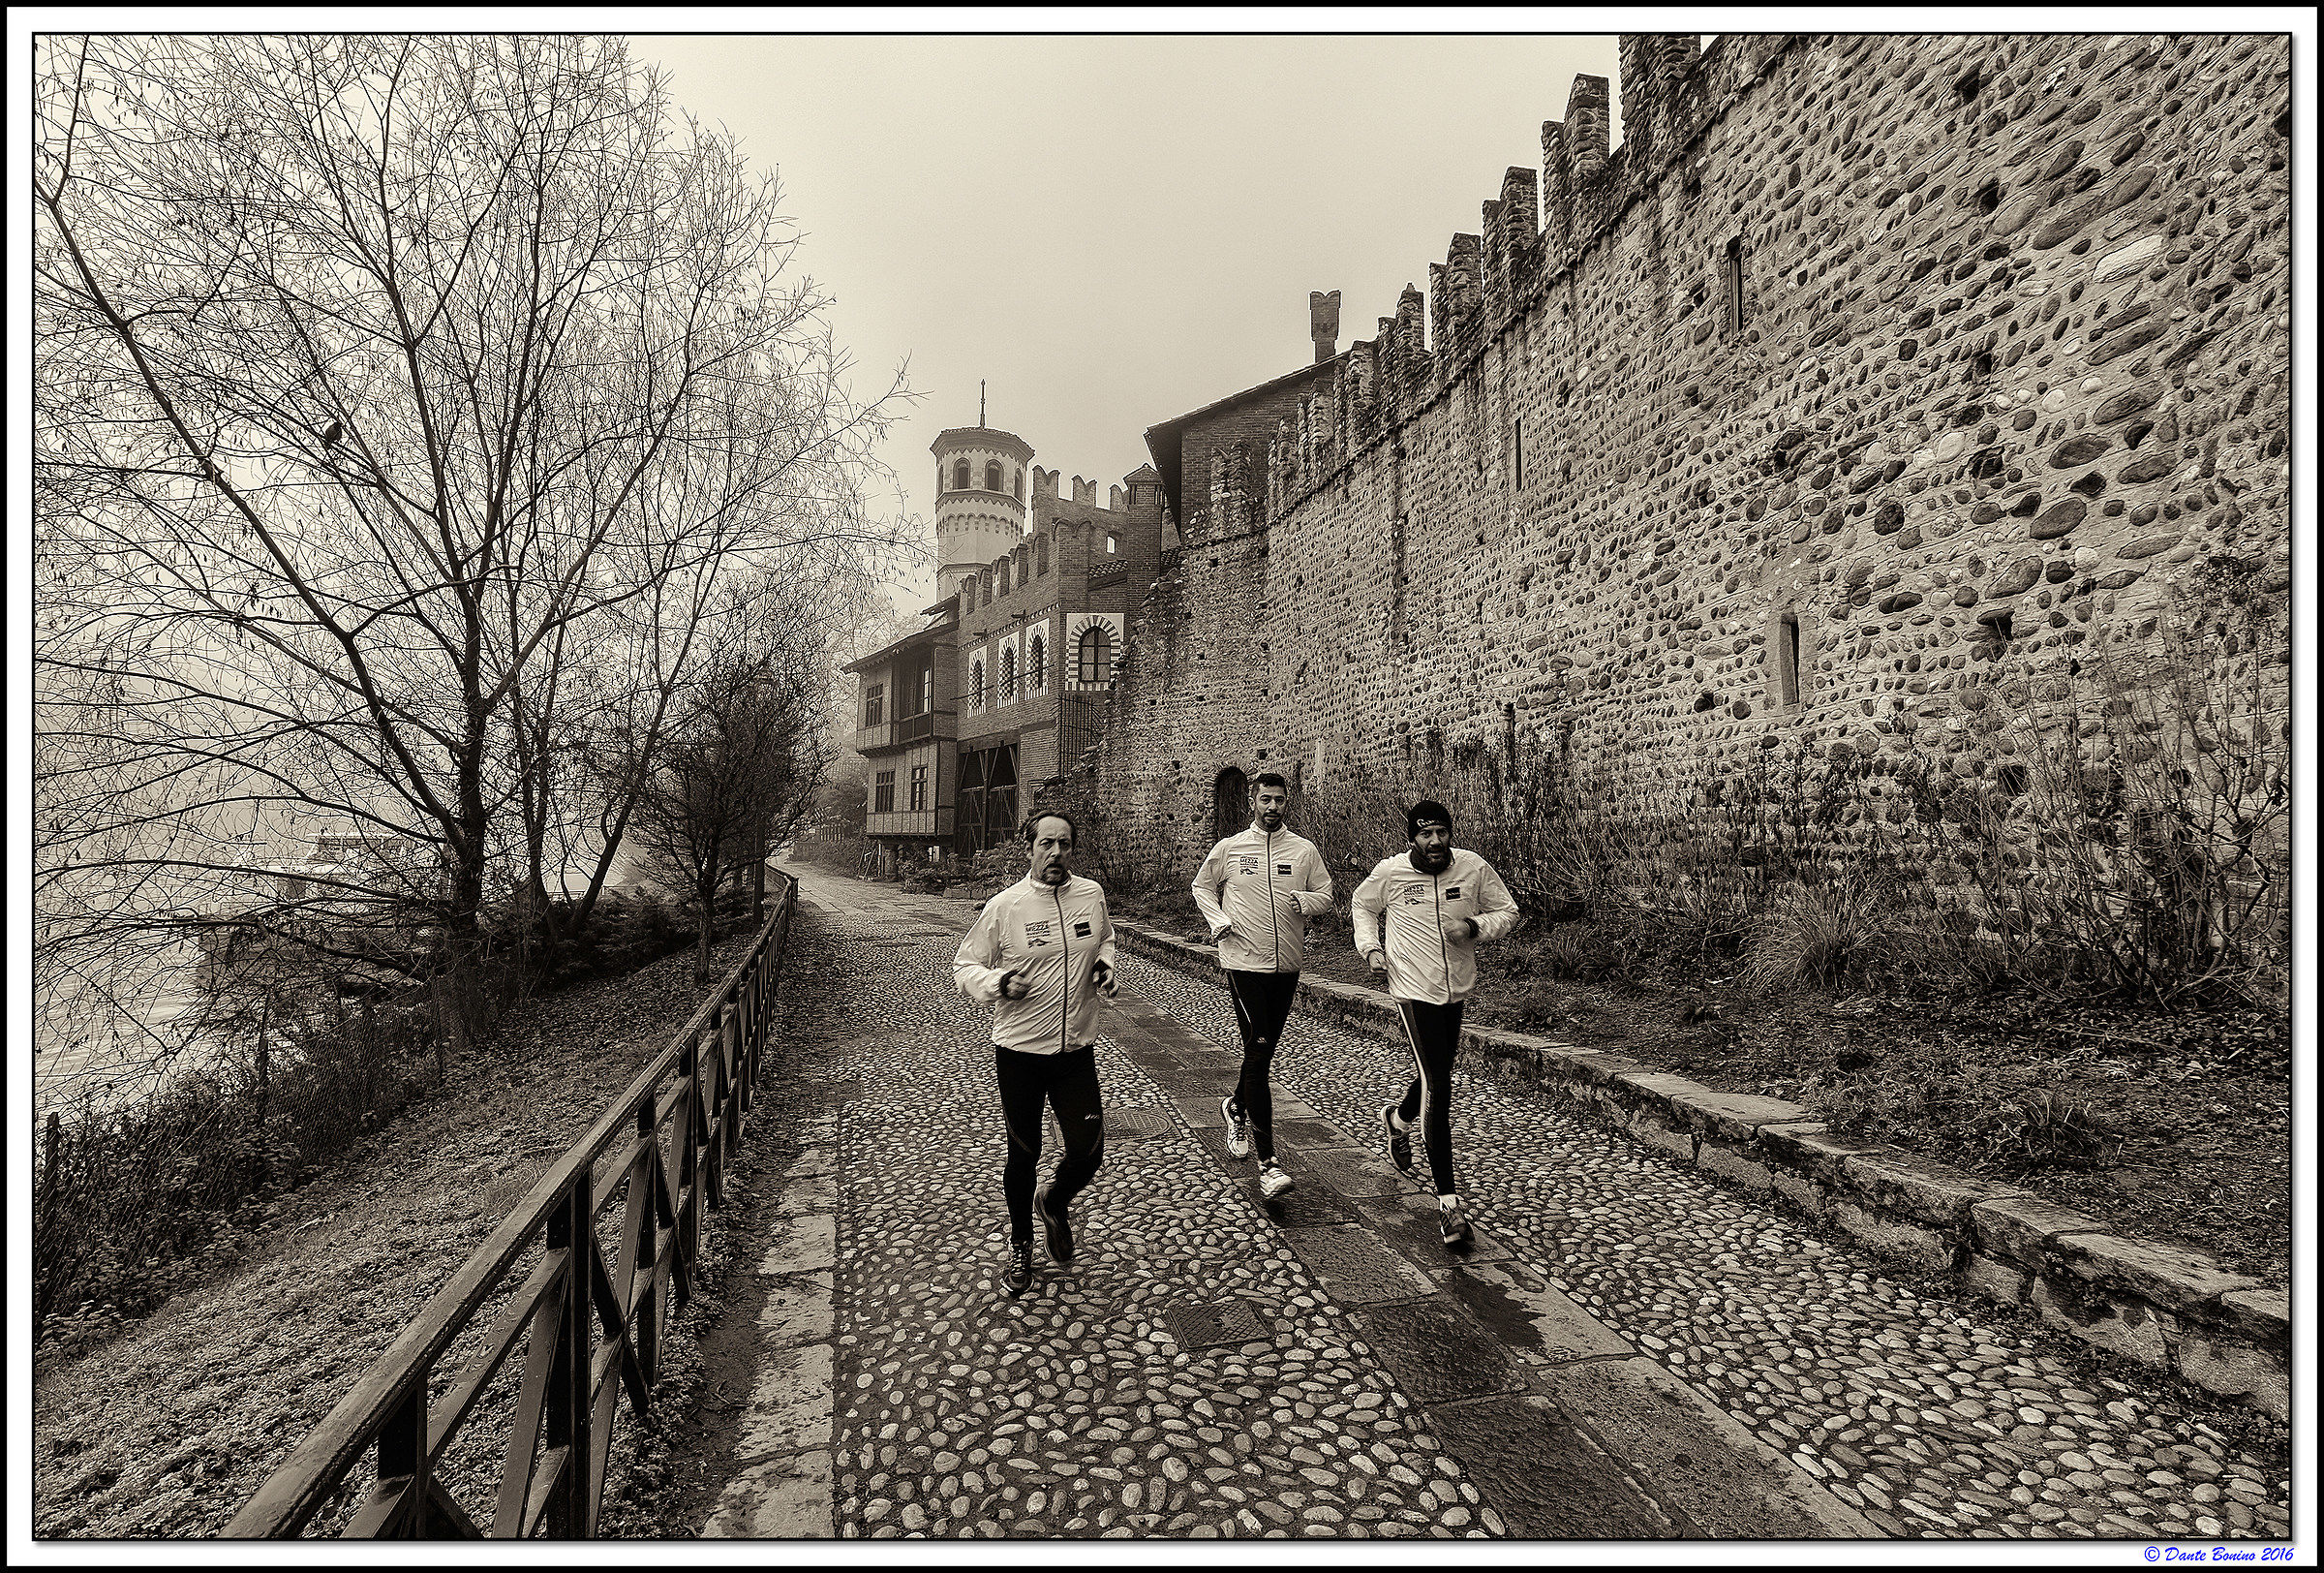 Running between the walls of the Borgo...